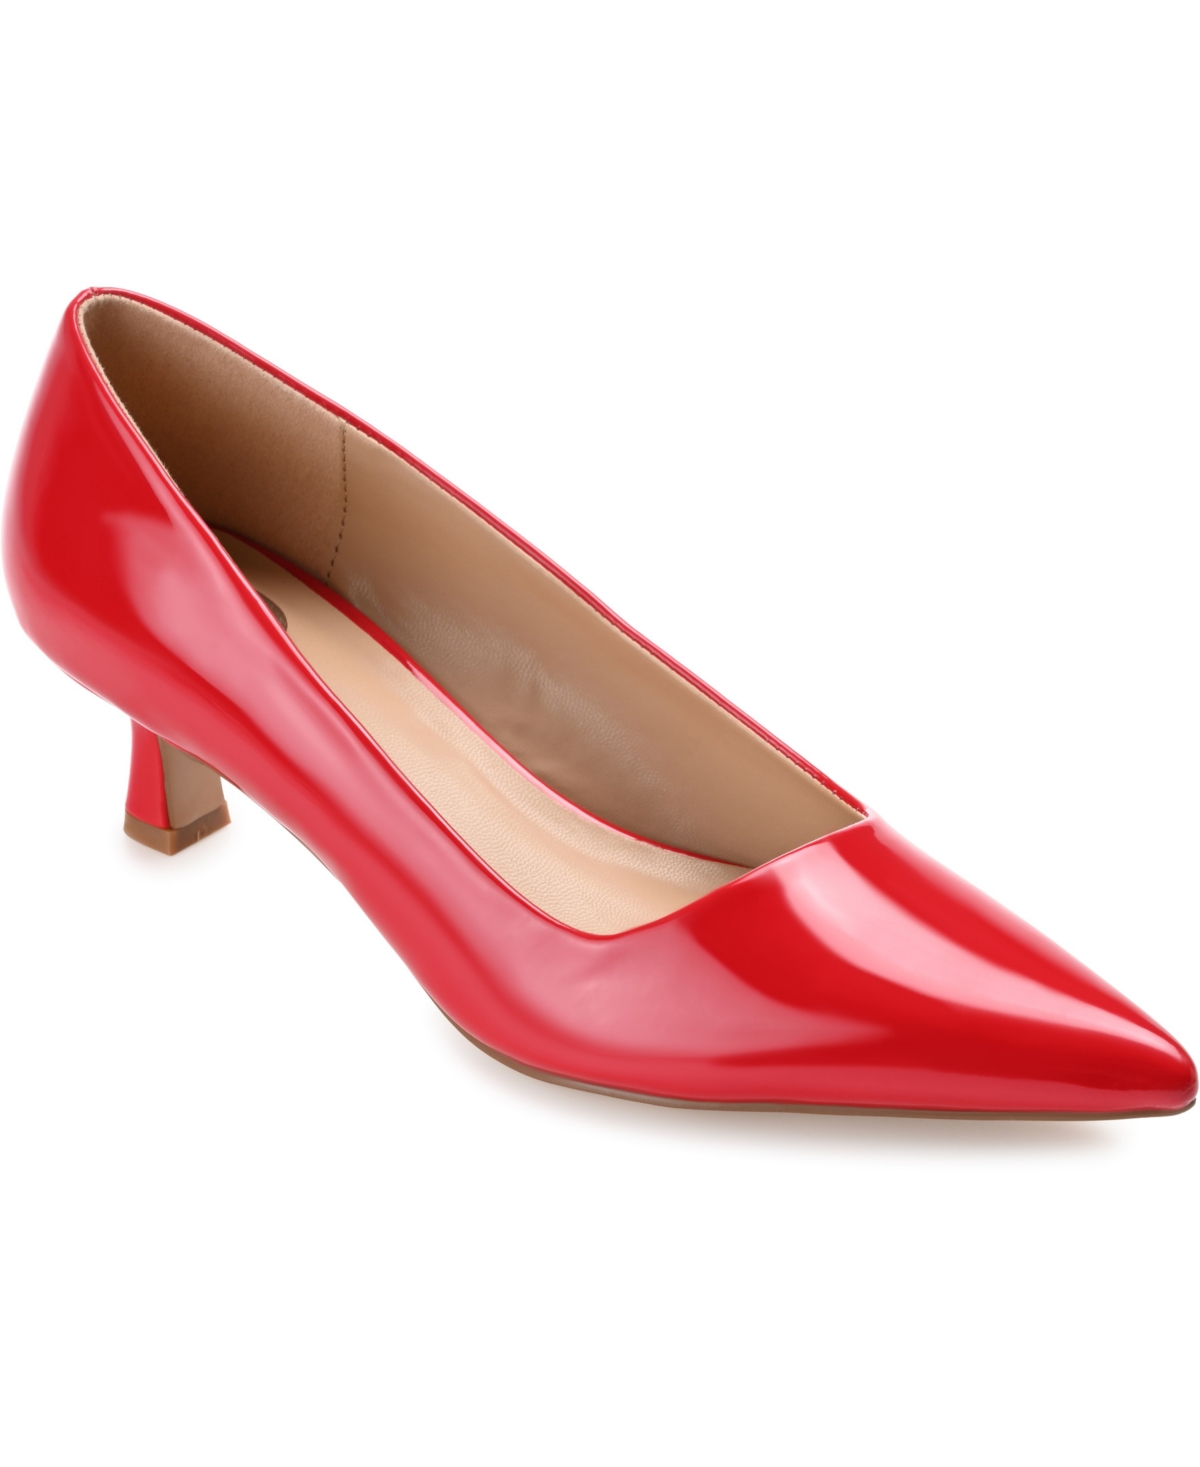 Vintage Shoes, Vintage Style Shoes Journee Collection Womens Celica Heels - Patent Red $71.24 AT vintagedancer.com